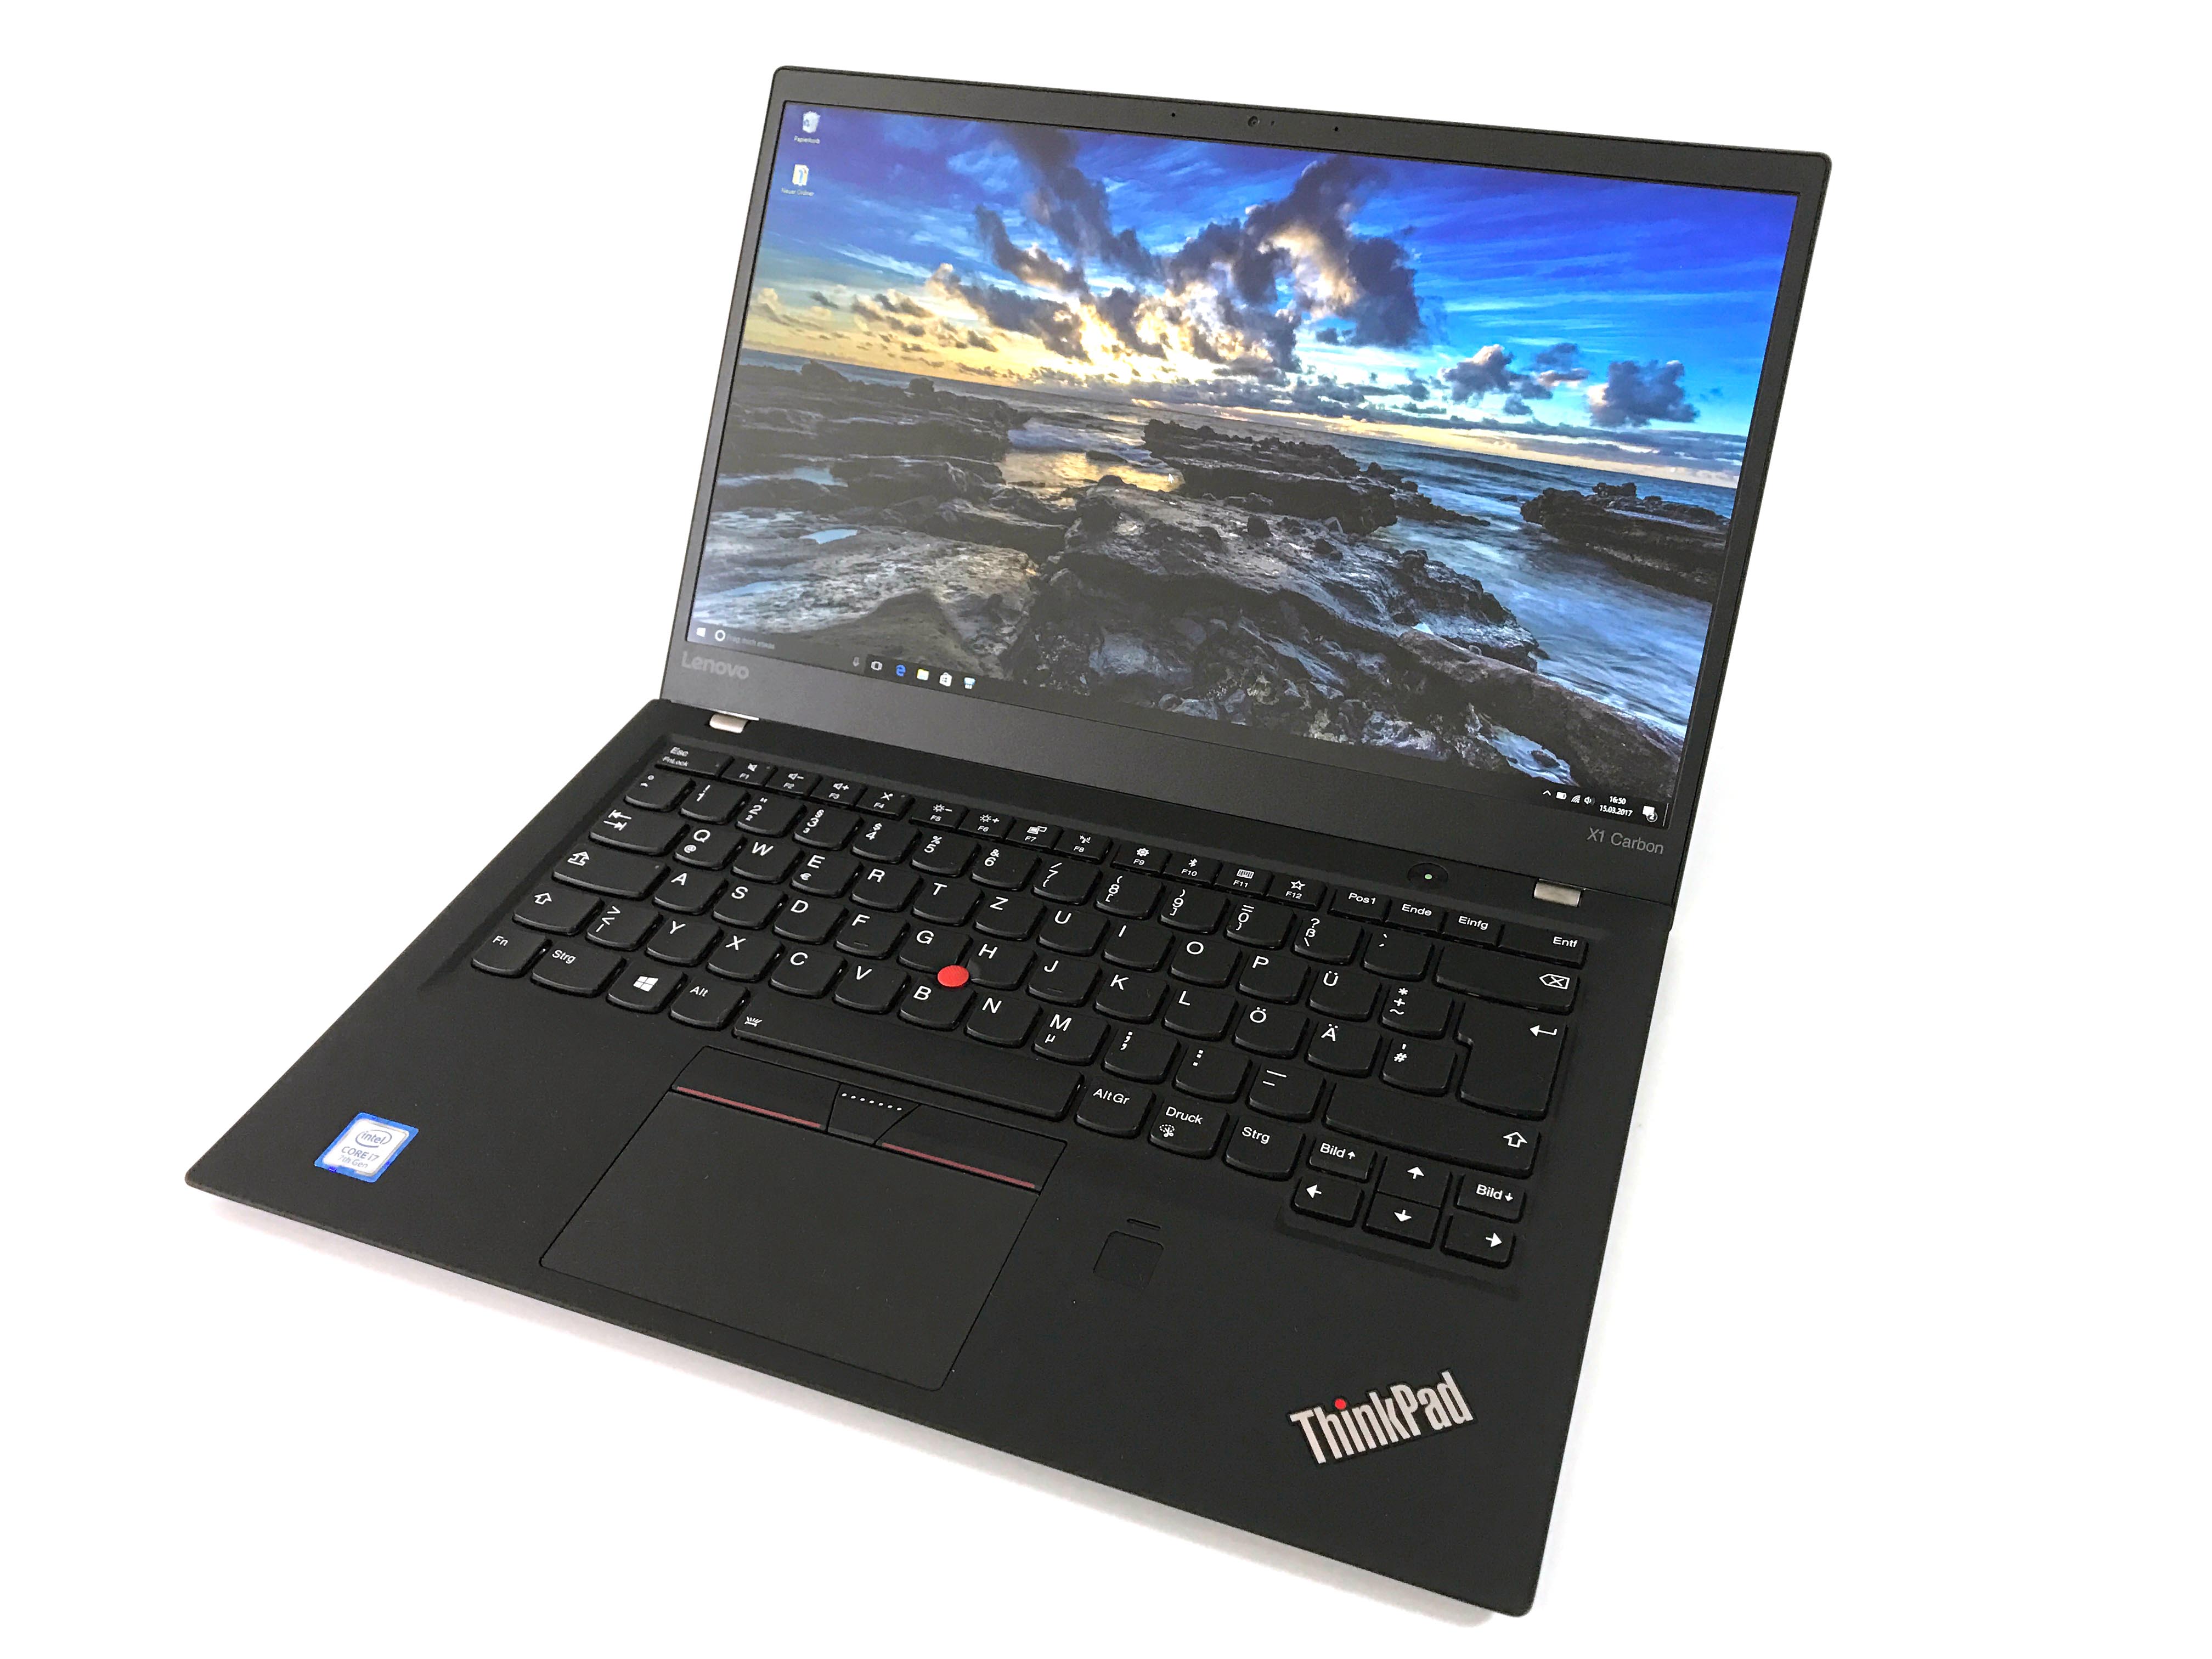 Lenovo ThinkPad X1 Carbon 2017 (Core i7, Full-HD) Laptop Review